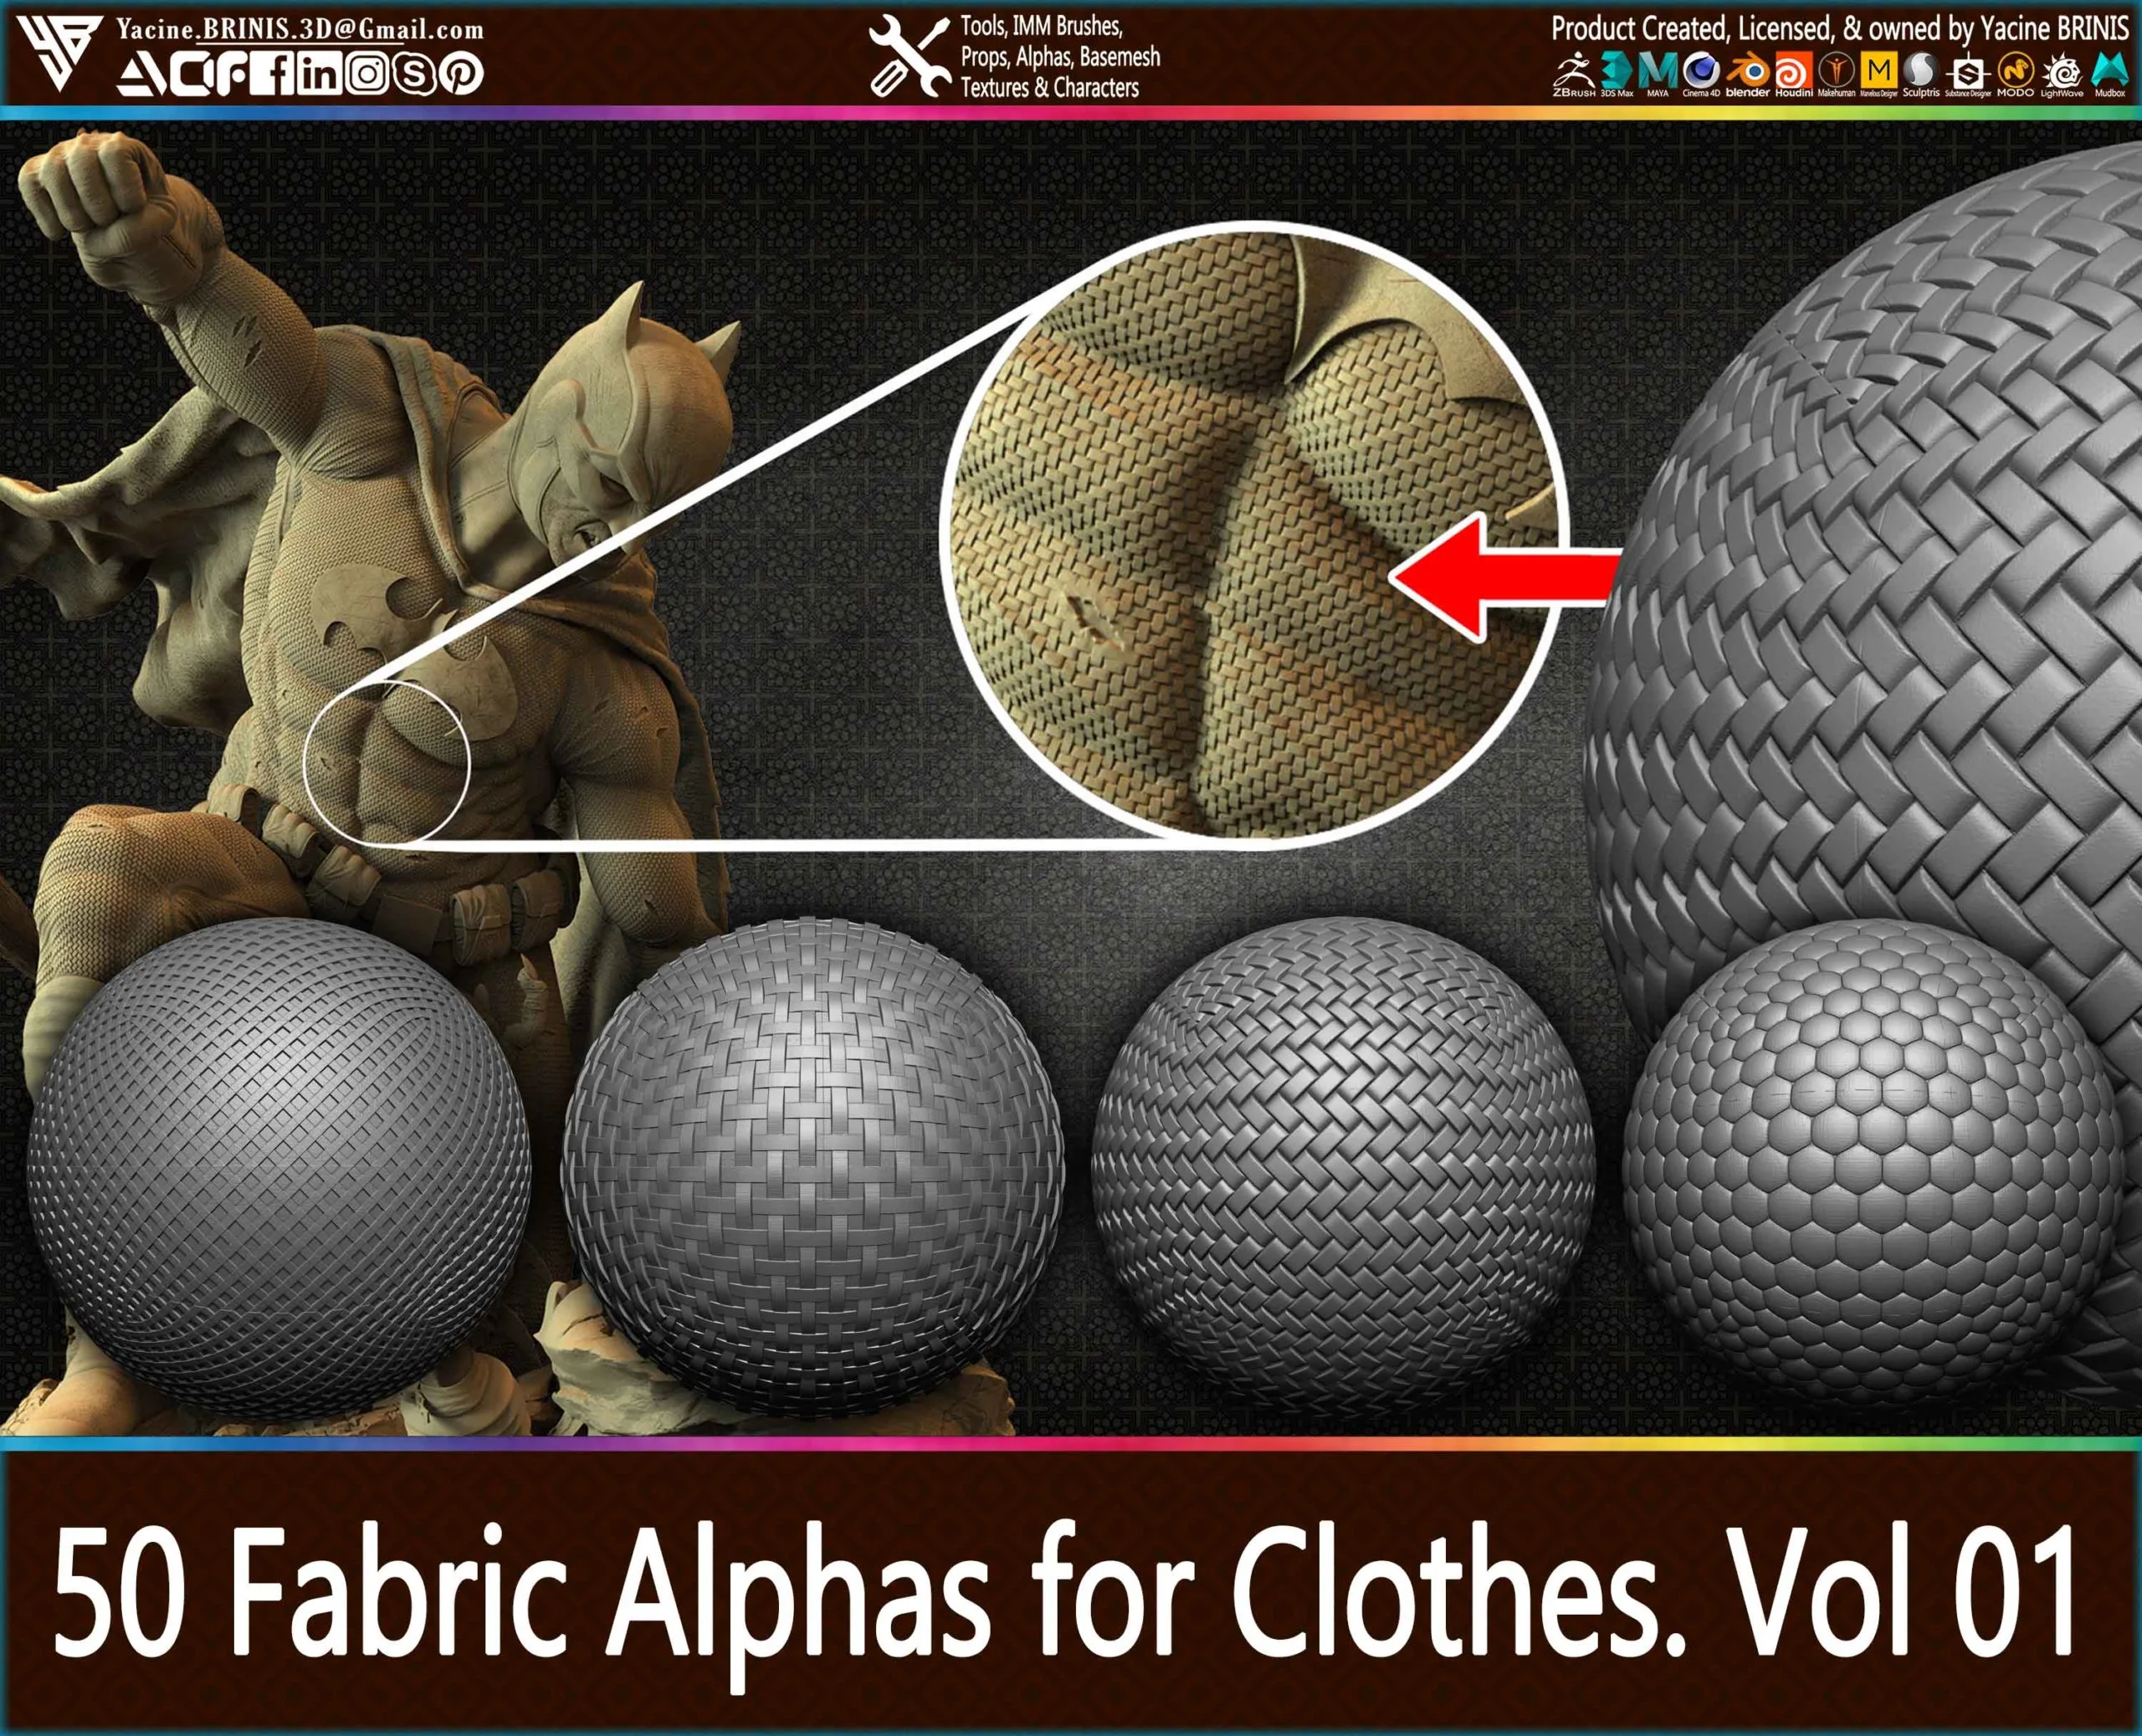 50 Fabric Alphas for Clothes Vol 01